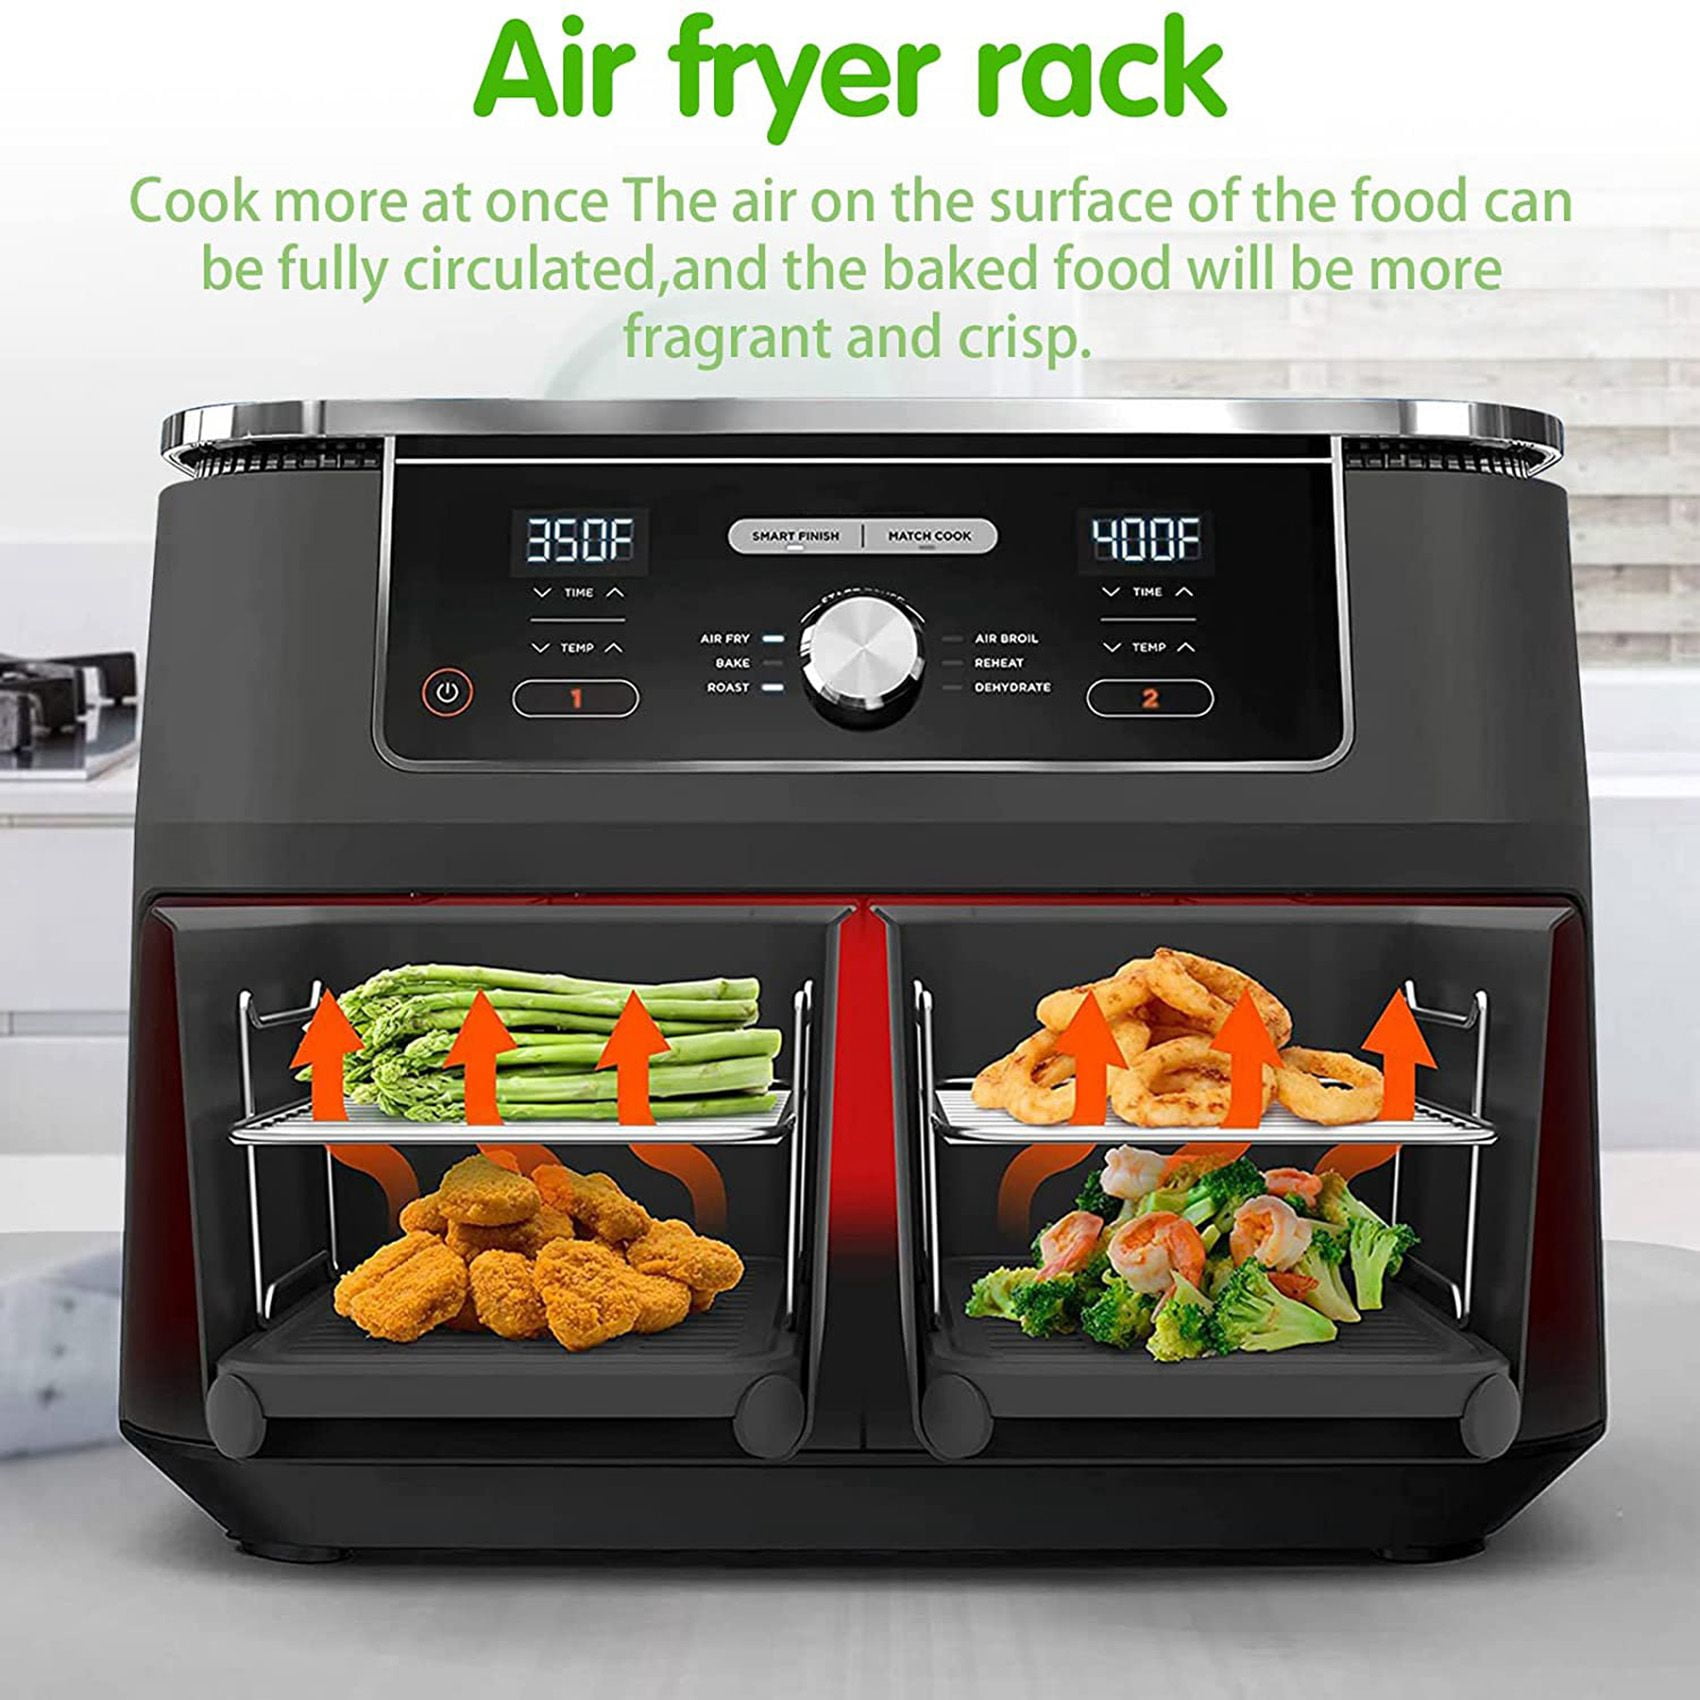 TuTuYa Air Fryer Rack for Ninja Dual Air Fryer DZ201/401 & Most 3.7-4.2Qt